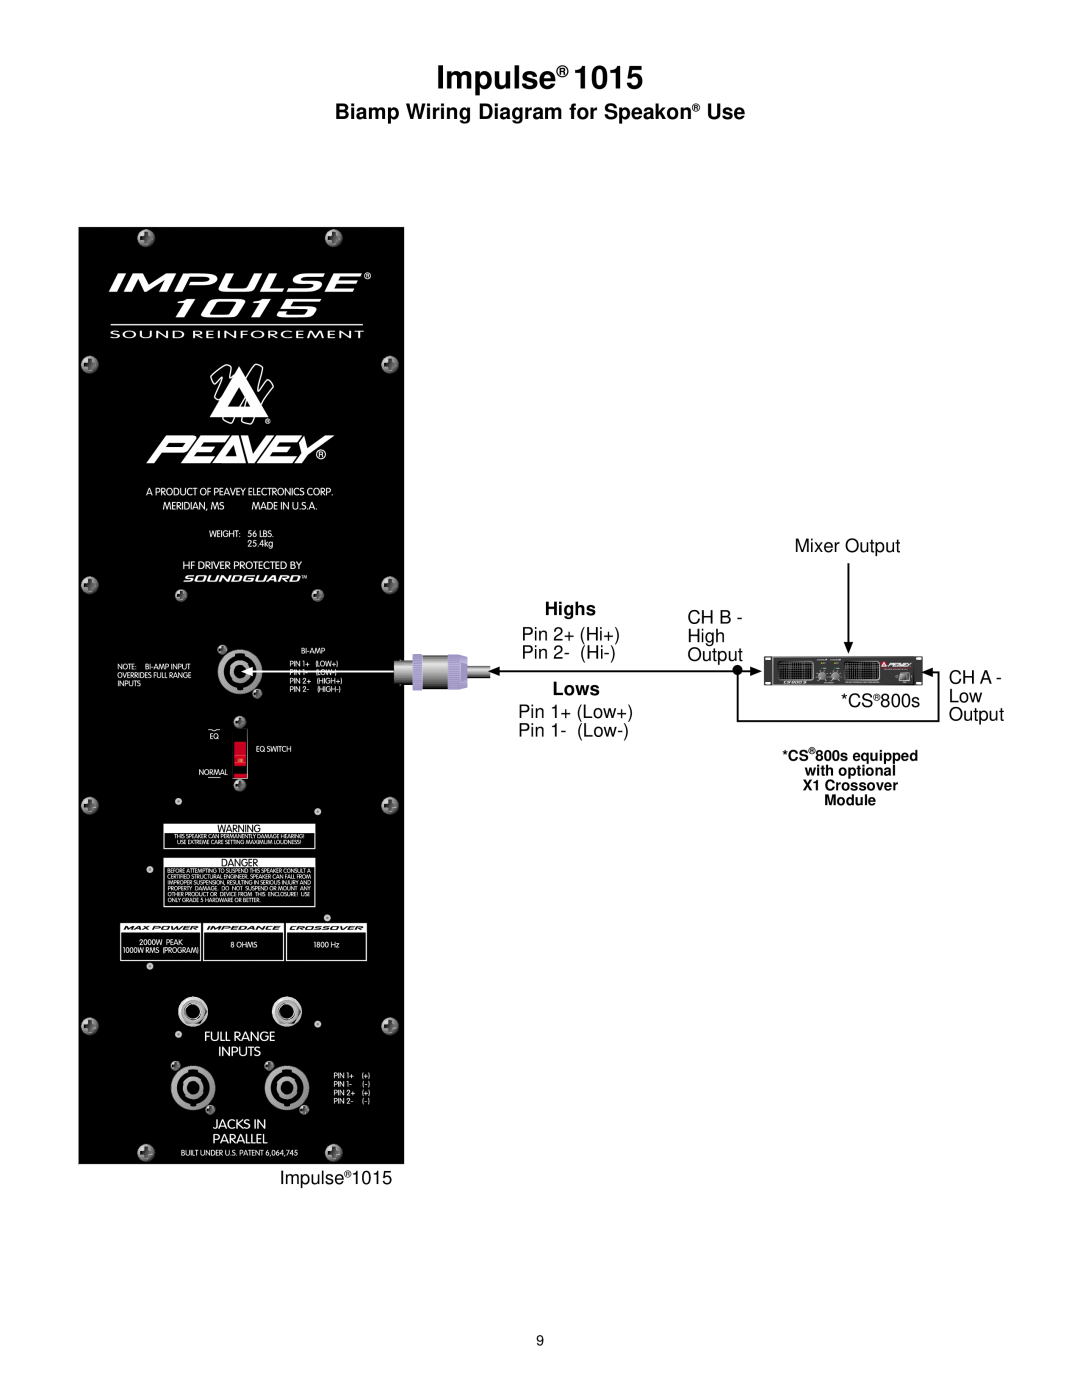 Peavey 1015 Impulse, Biamp Wiring Diagram for Speakon Use, CS 800s, Mixer Output, Ch B, Pin 2+ Hi+, High, Pin 2- Hi 